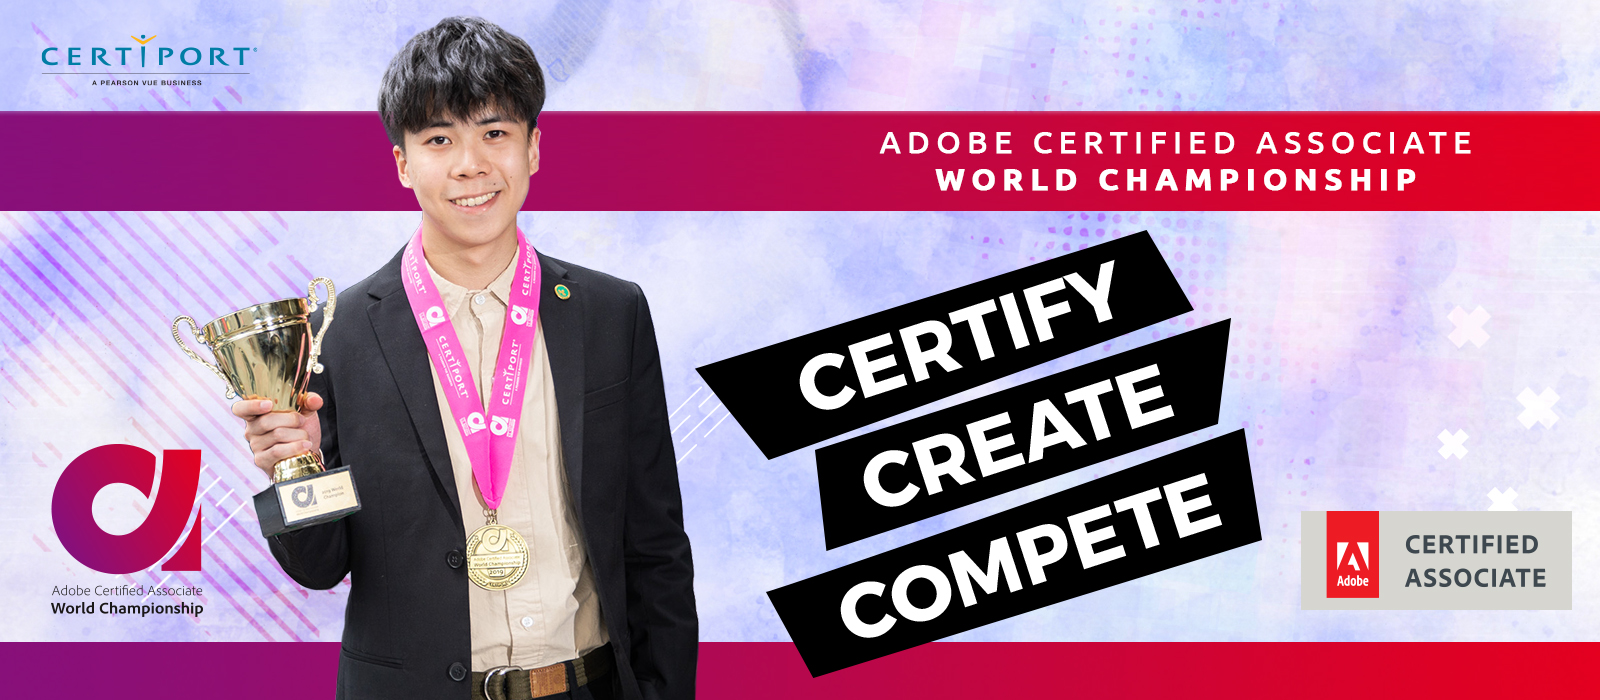 Adobe Certified Associate World Championship Orlando, Florida